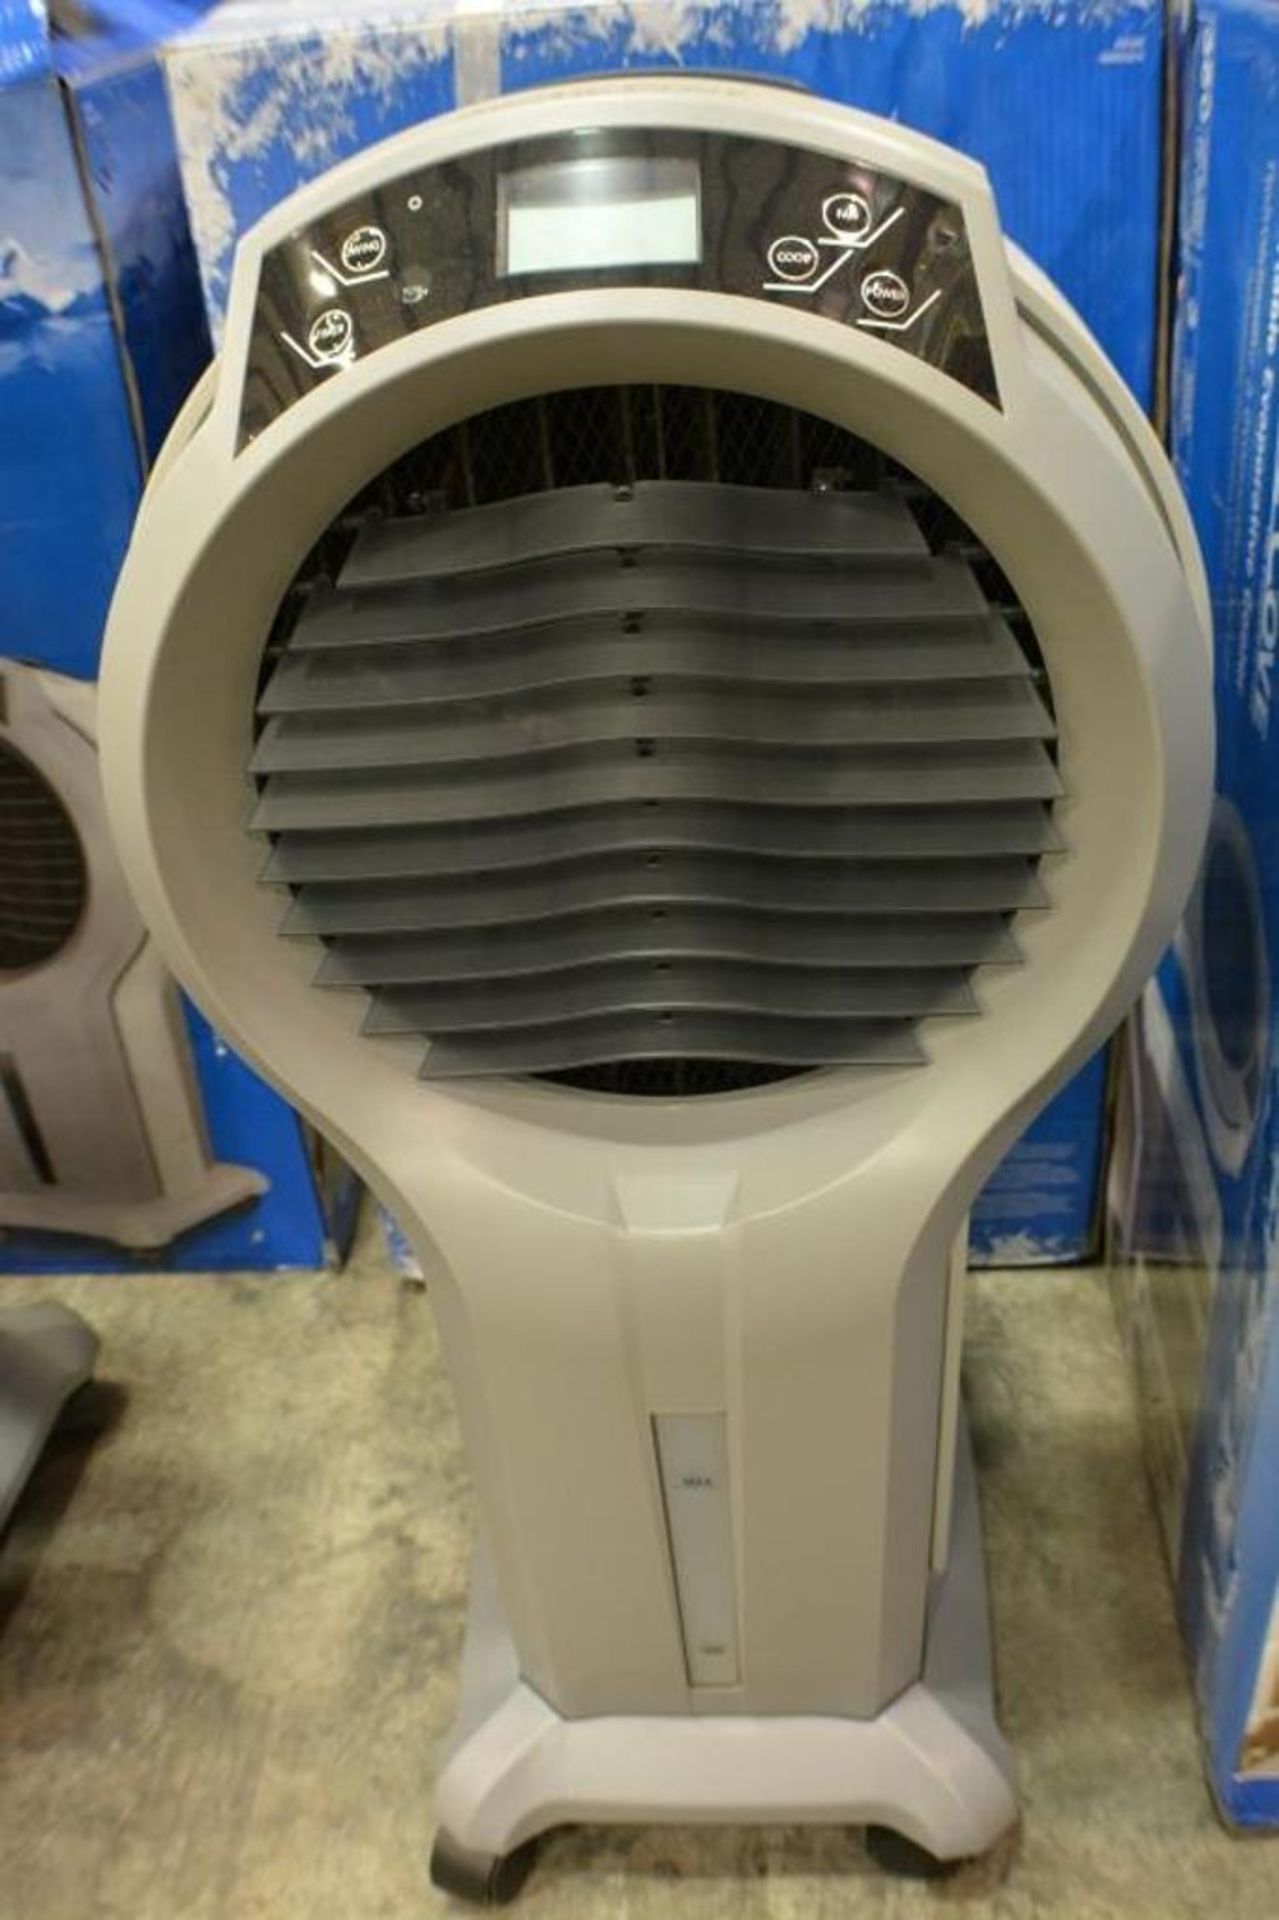 Portable Evaporative Cooler 350 Cubit Feet per minute air volume 3 Gallon Water Capacity 3 Speed Set - Image 3 of 3